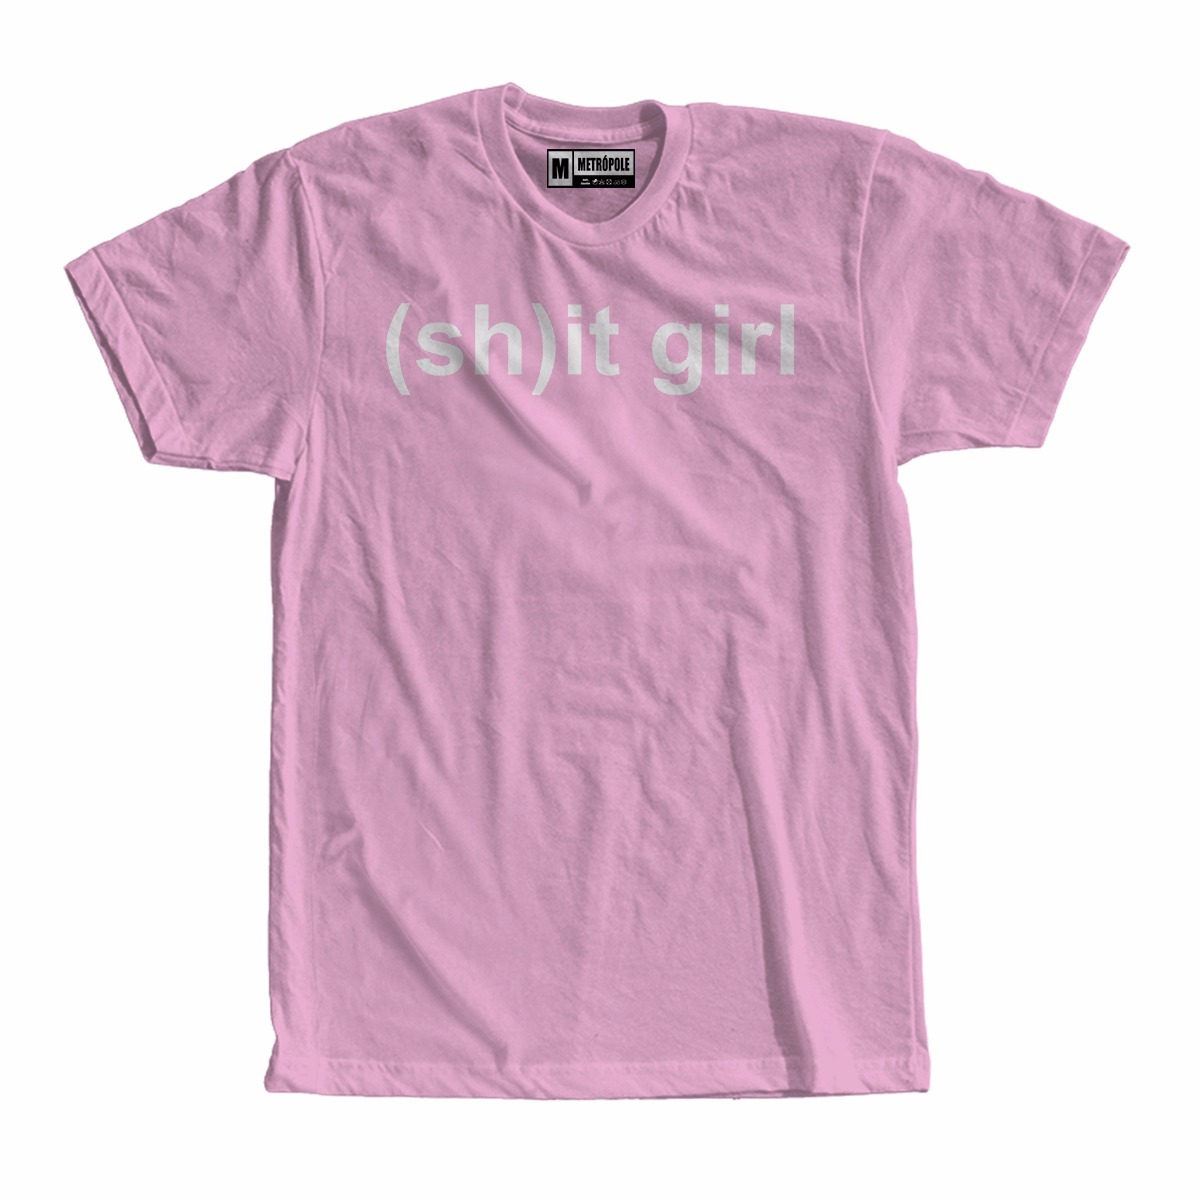 Camiseta Camisa Blusa Sh It Girl Frases Moda Tumblr Feminina R 35